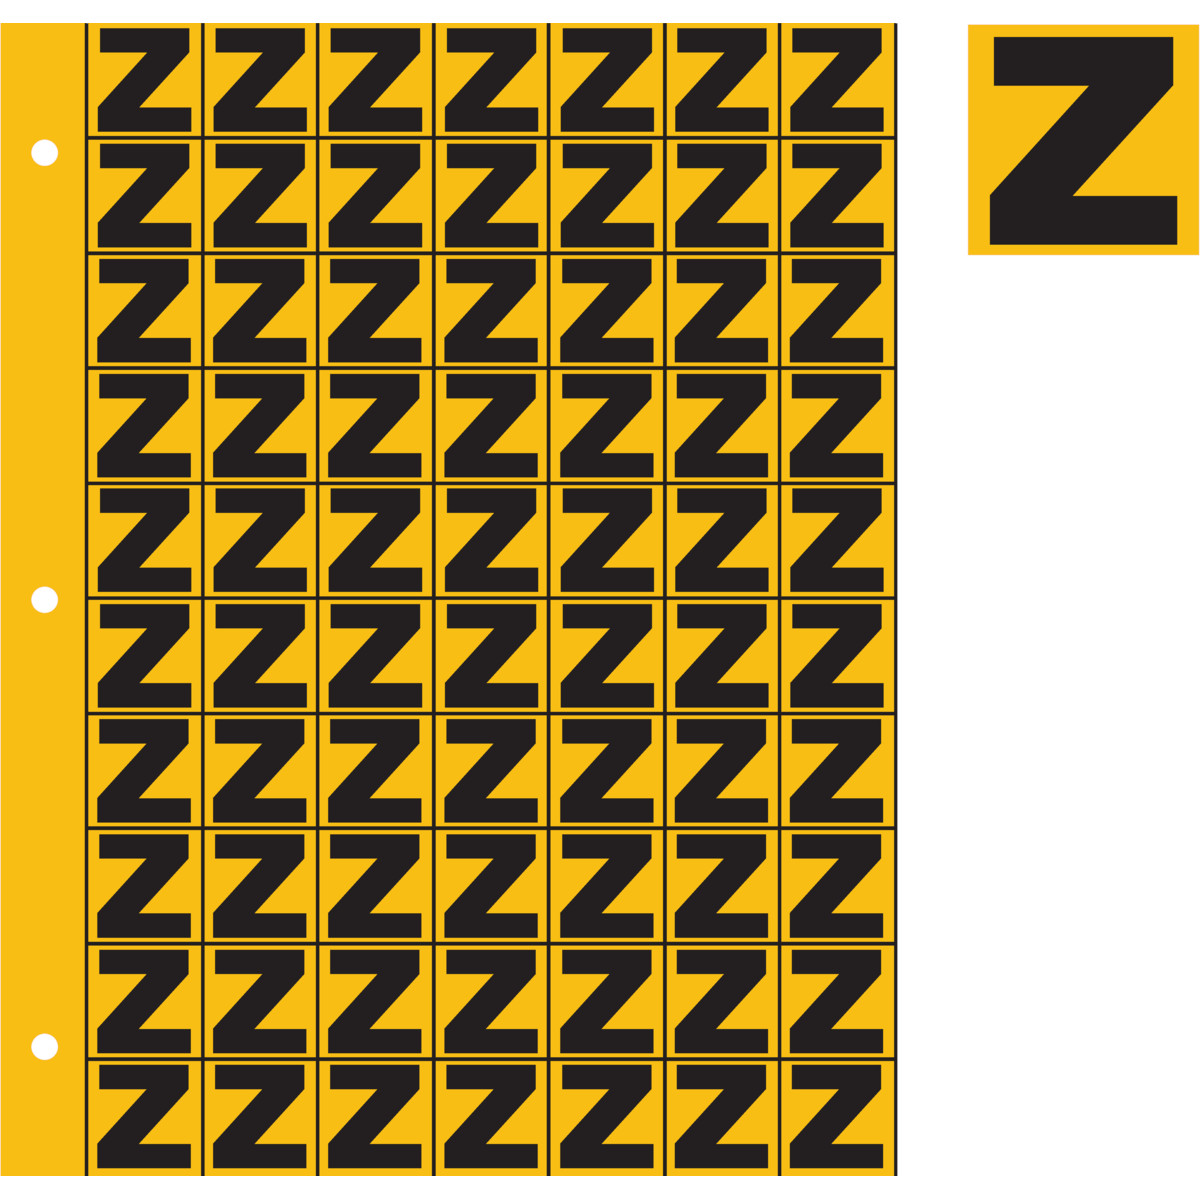 1" Black on Yellow Engineer Grade Reflective "Z"